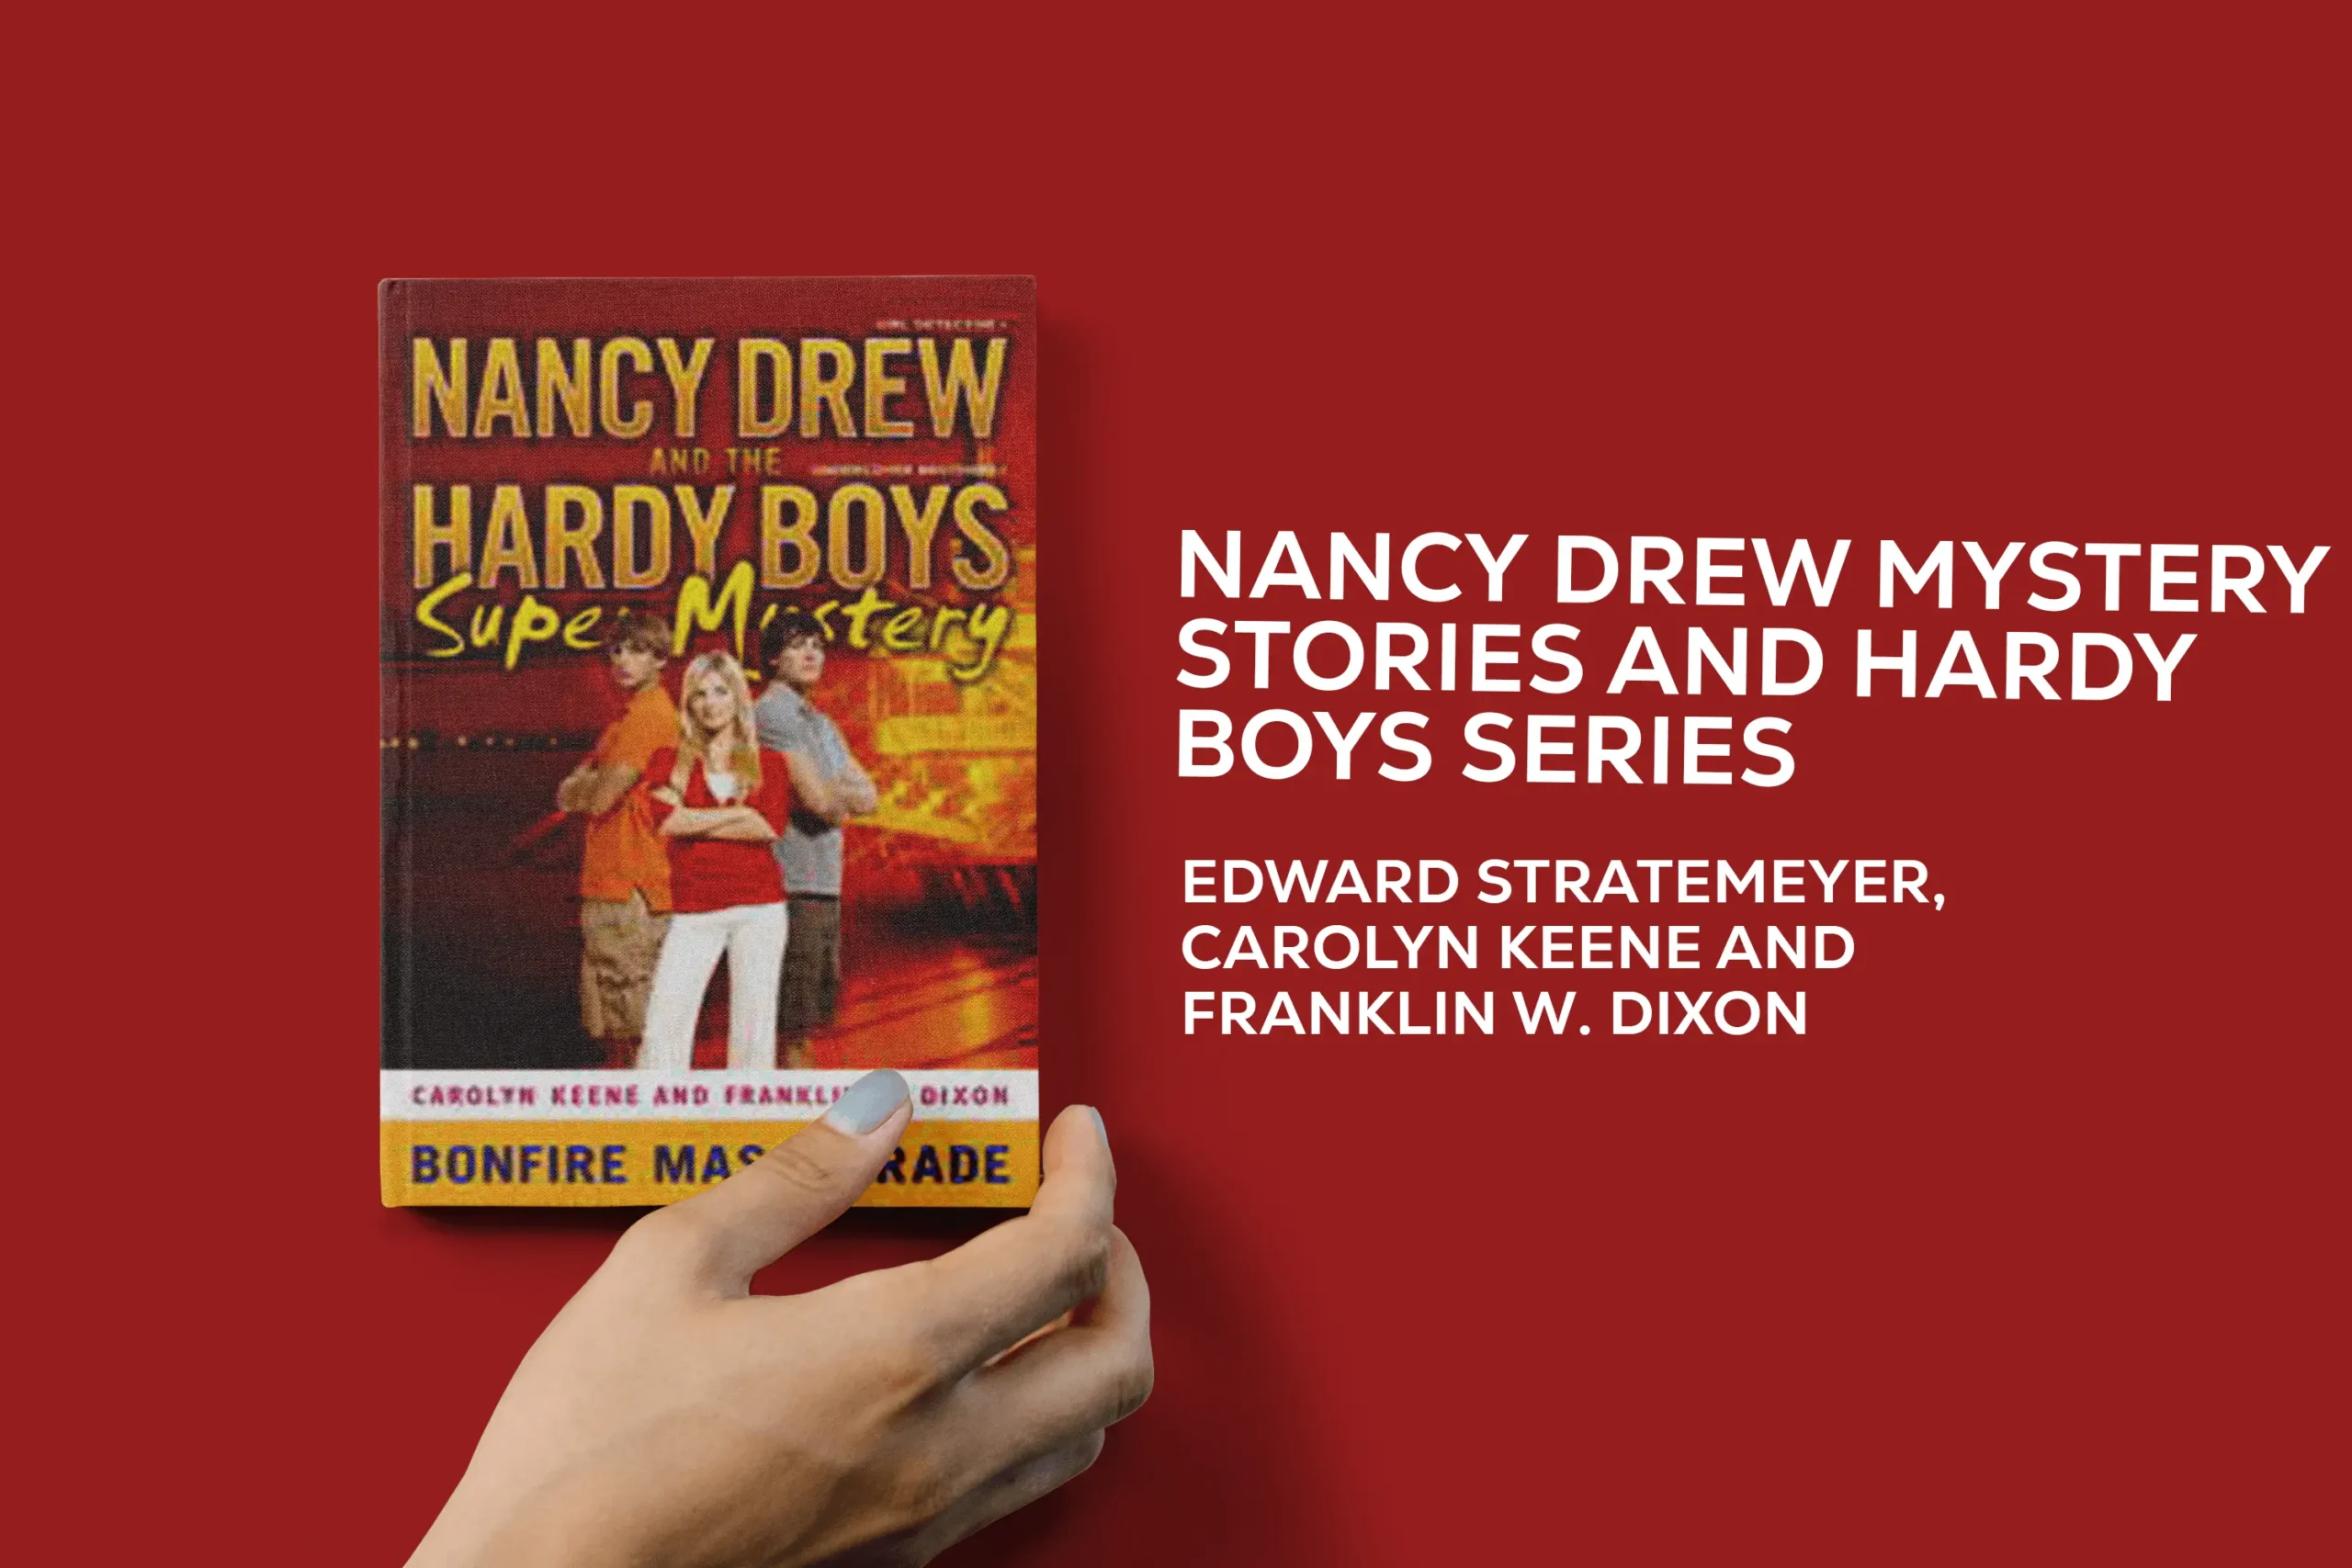  Nancy Drew Mystery Stories and Hardy Boys series